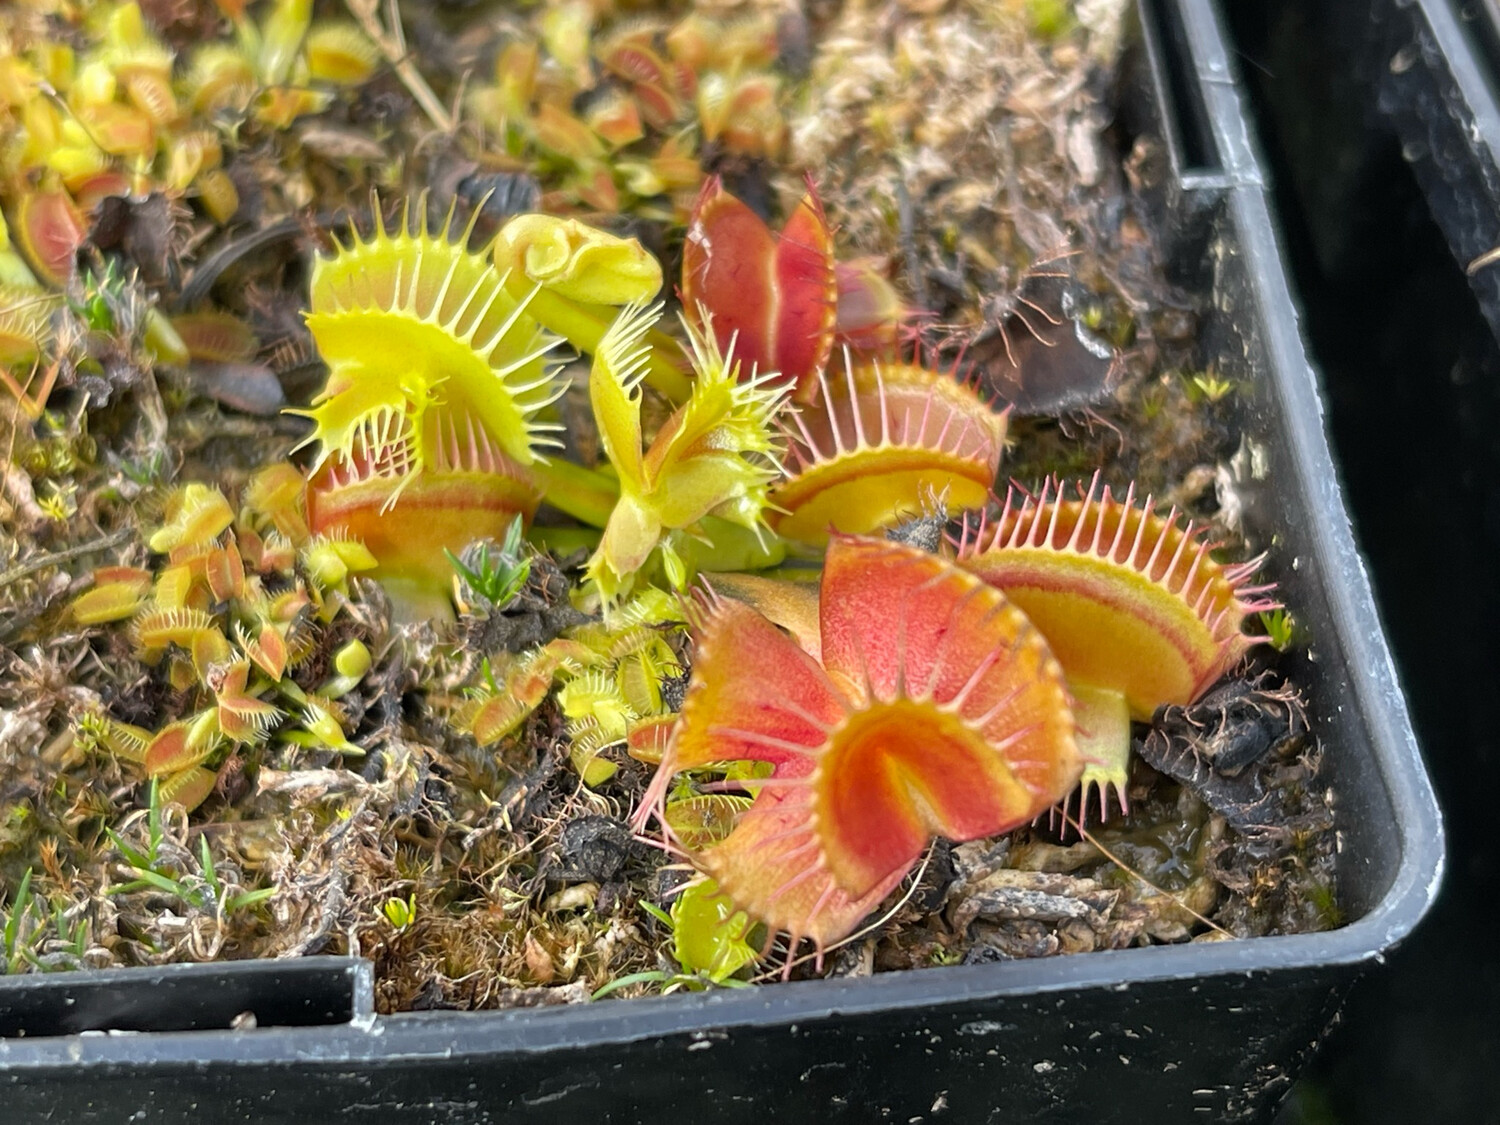 Dionaea muscipula “Cerberus” Venus Flytrap (small)